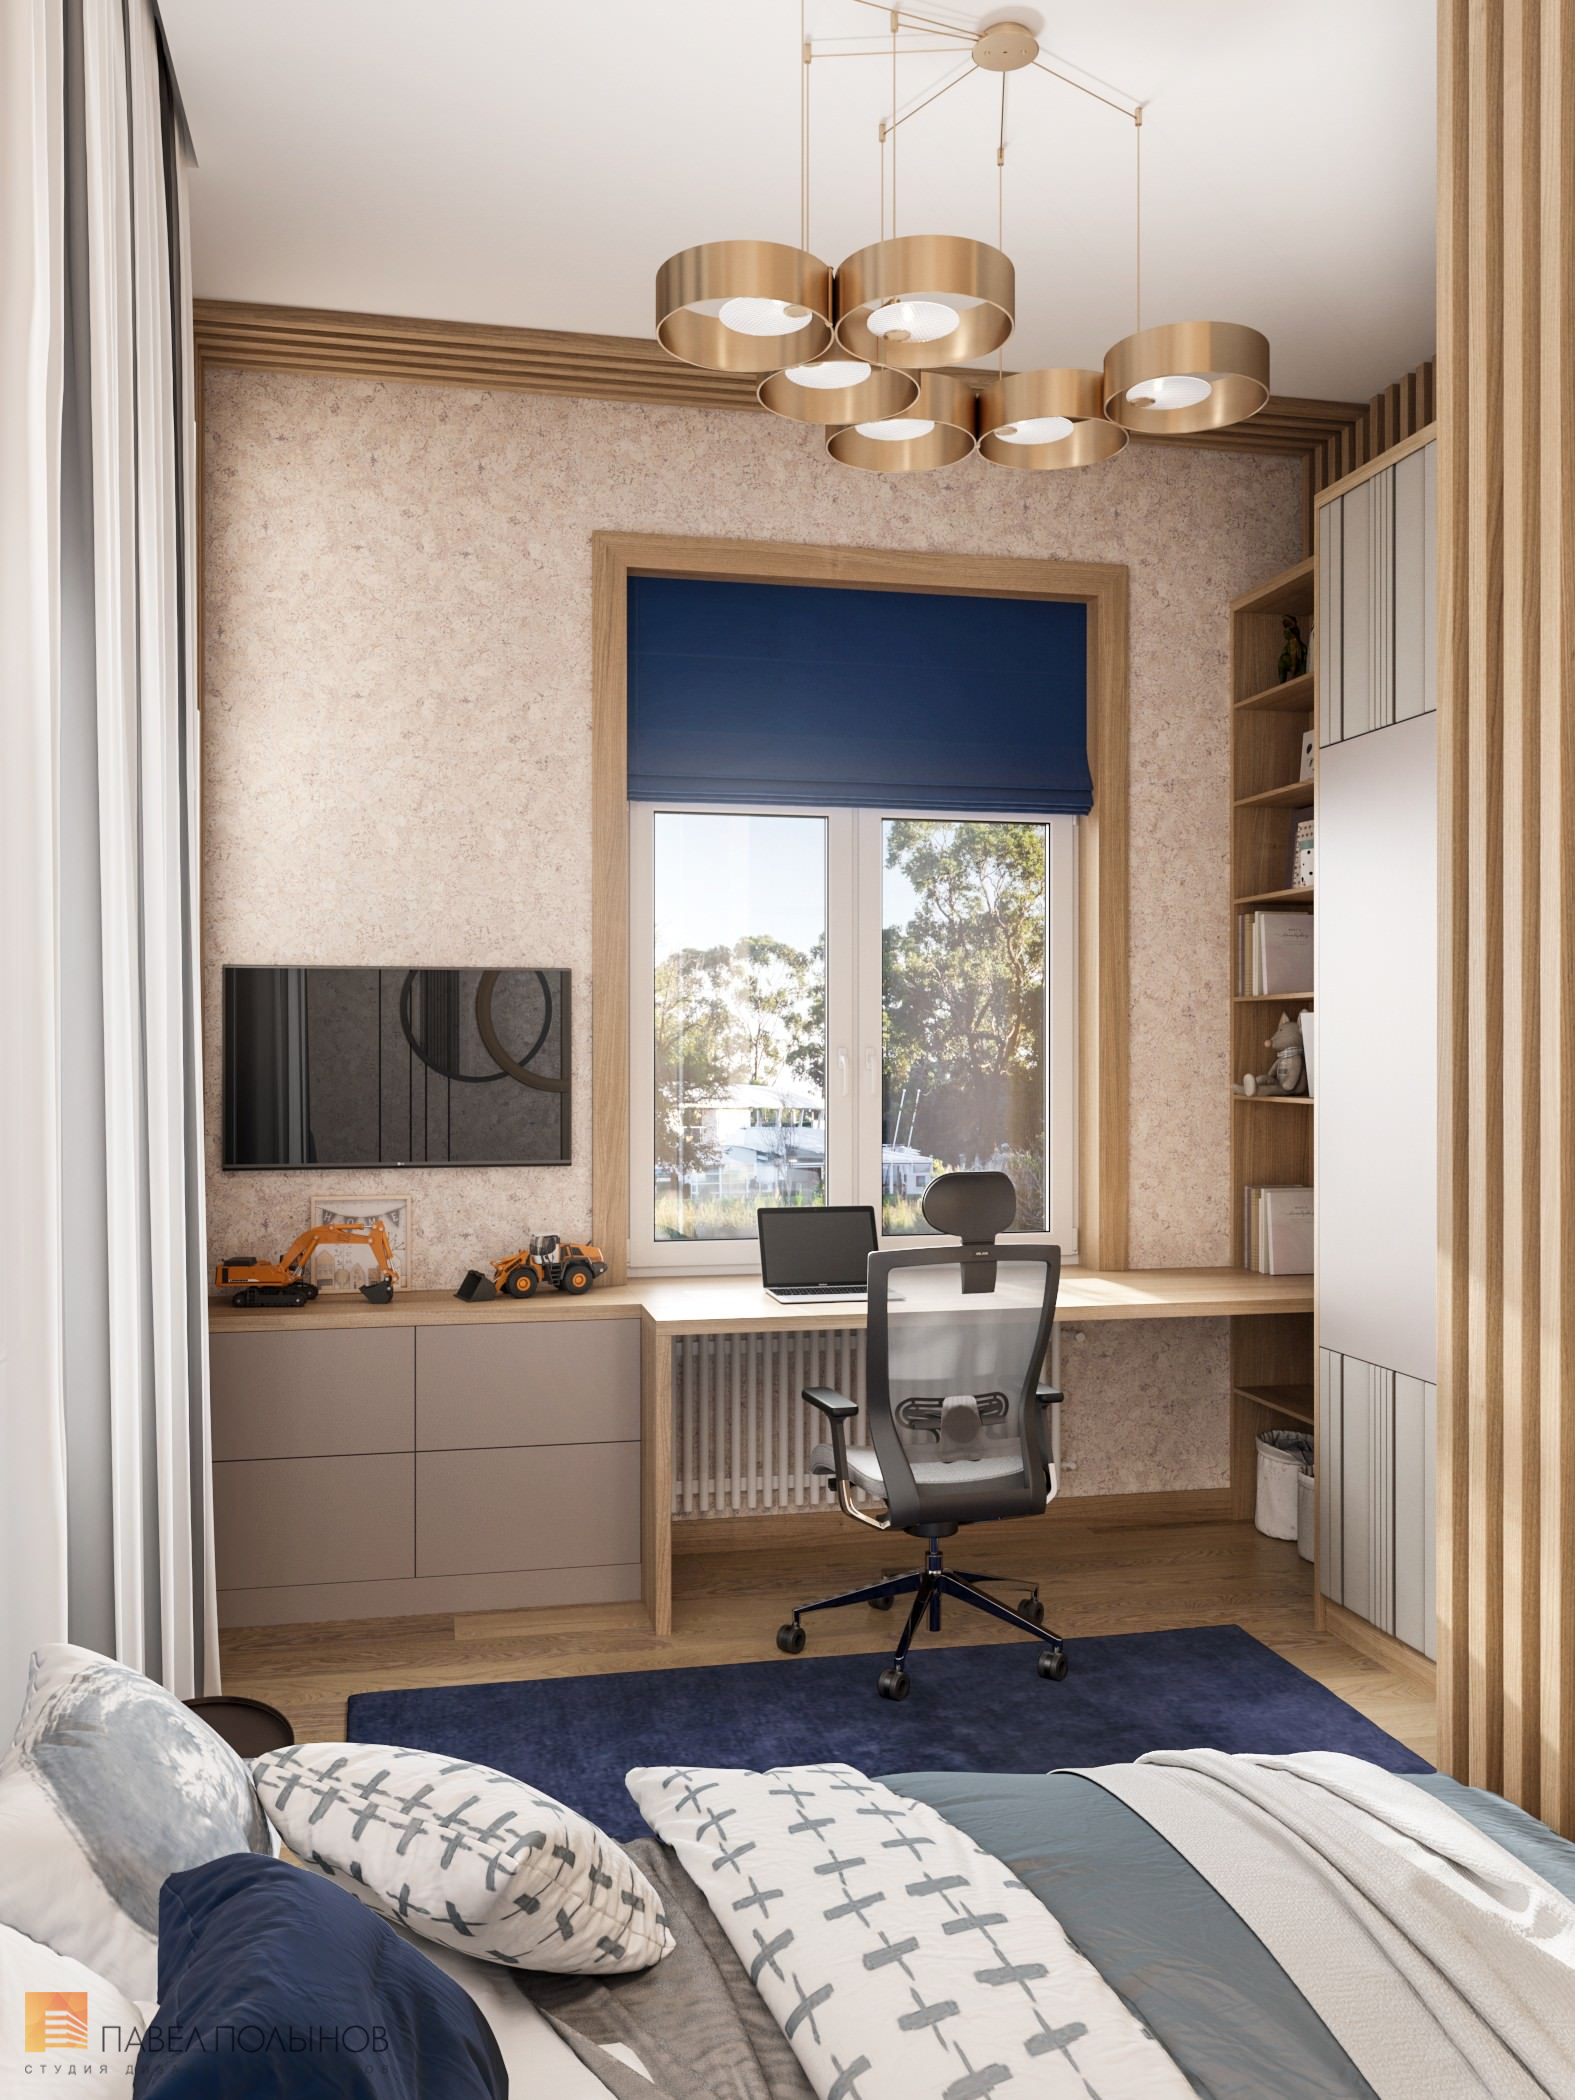 Фото интерьер детской комнаты из проекта «Дизайн интерьера квартиры в стиле Ар-деко, 100 кв.м.»